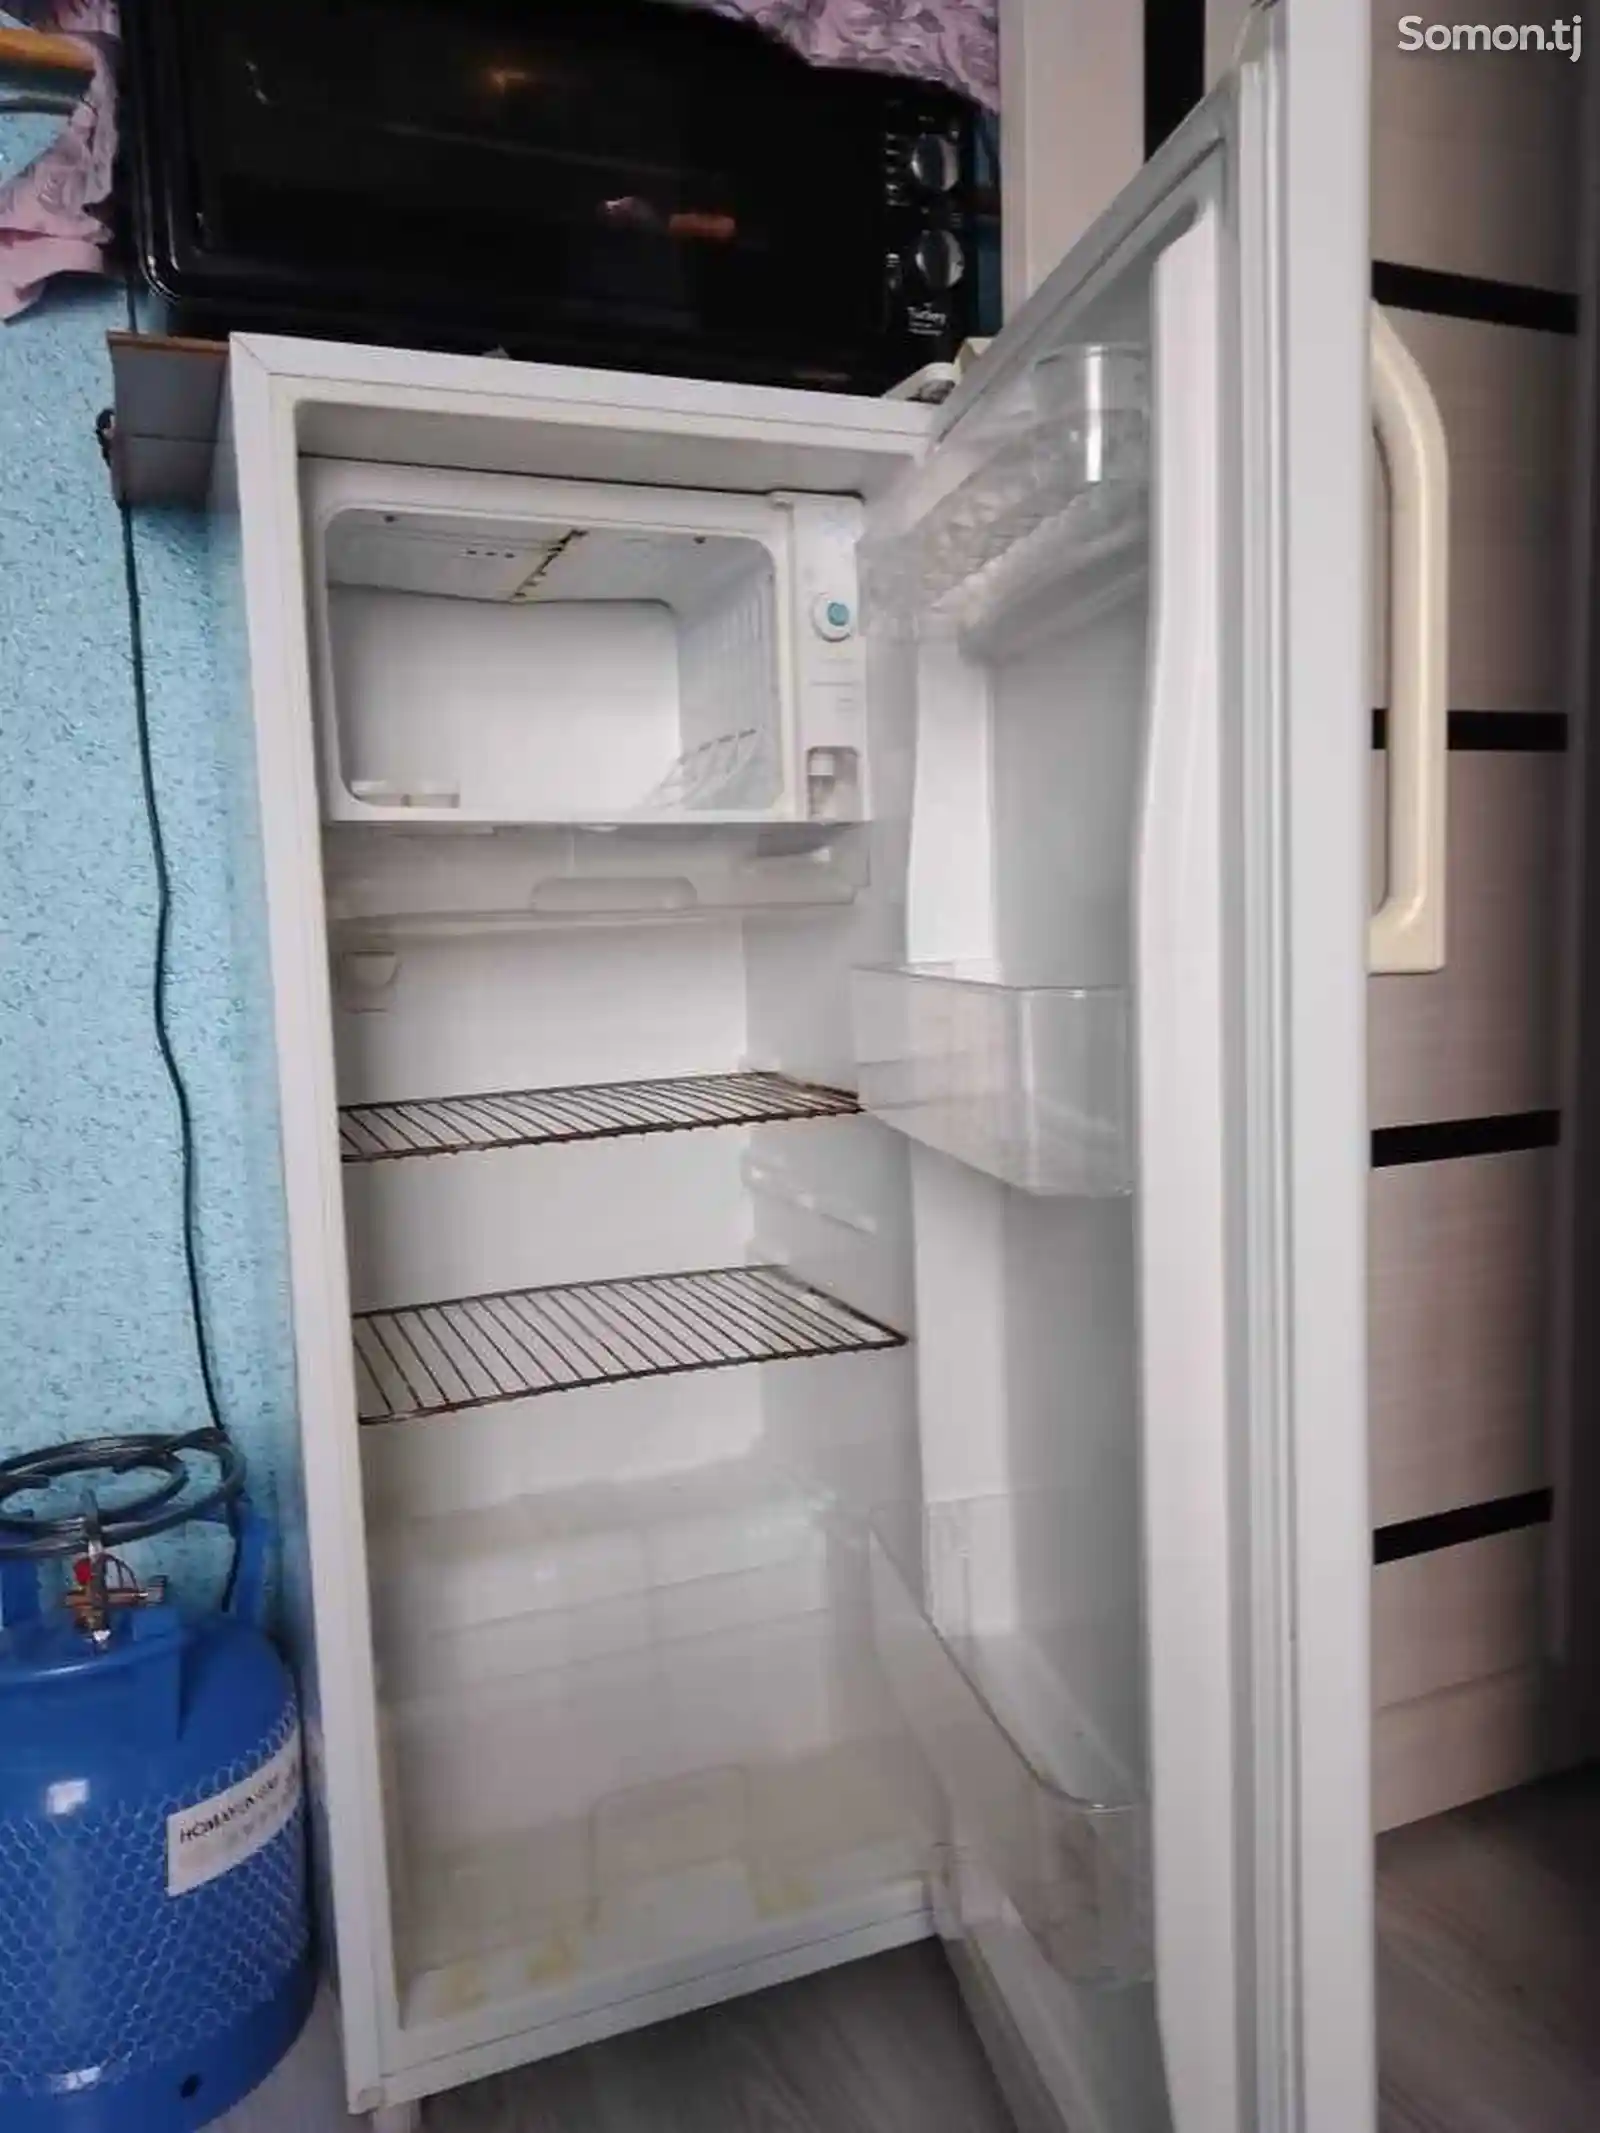 Холодильник Almas-2